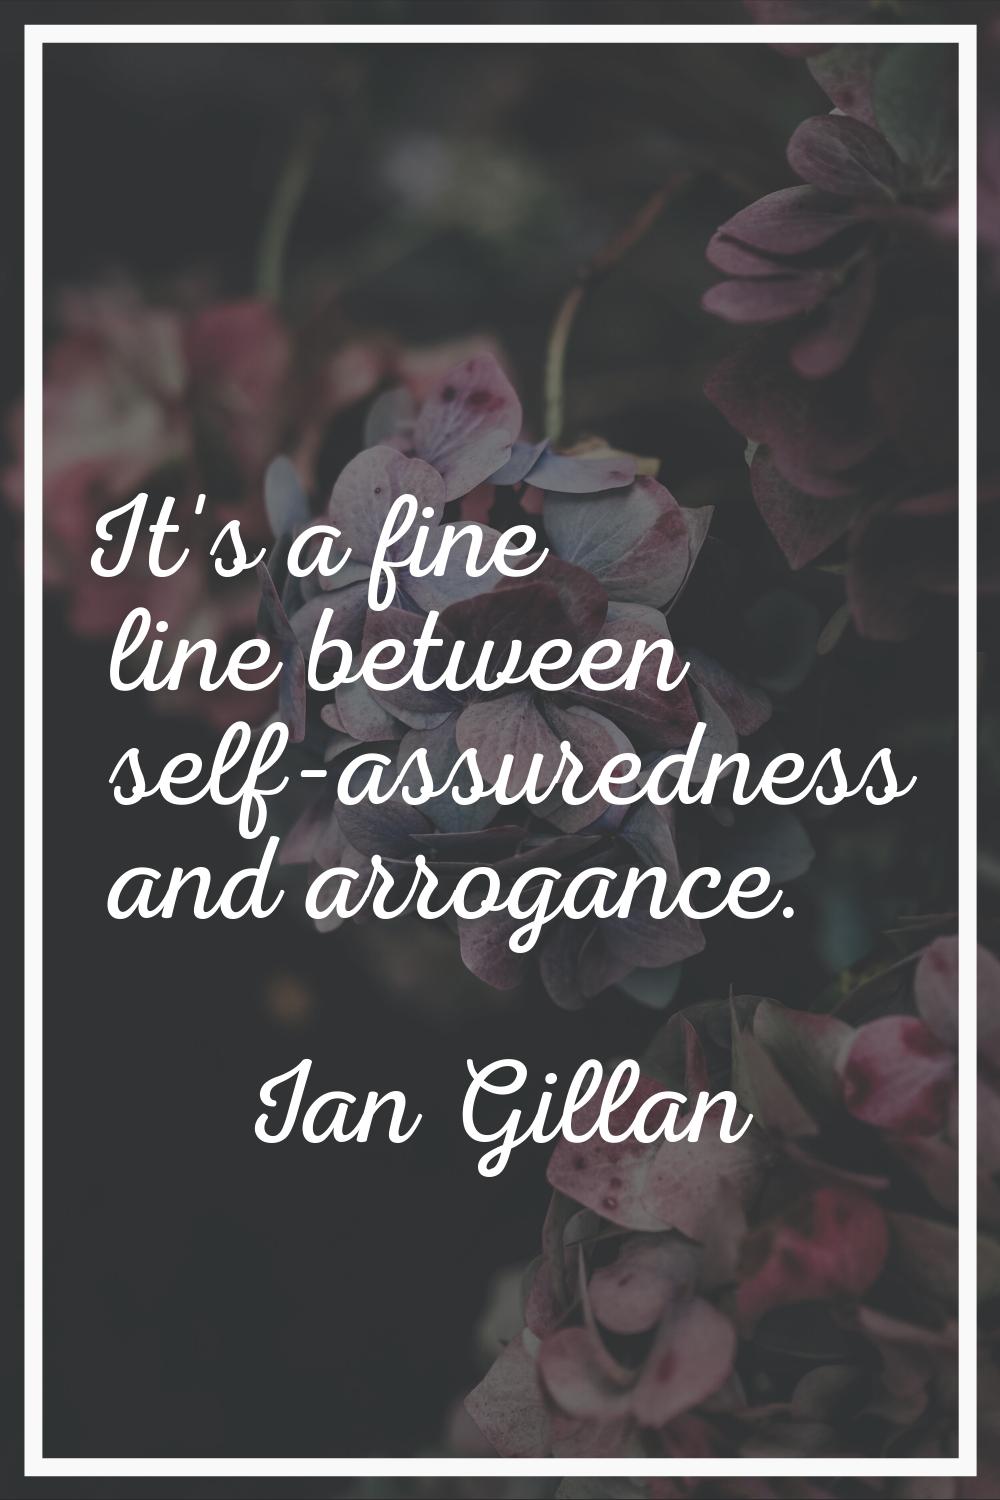 It's a fine line between self-assuredness and arrogance.